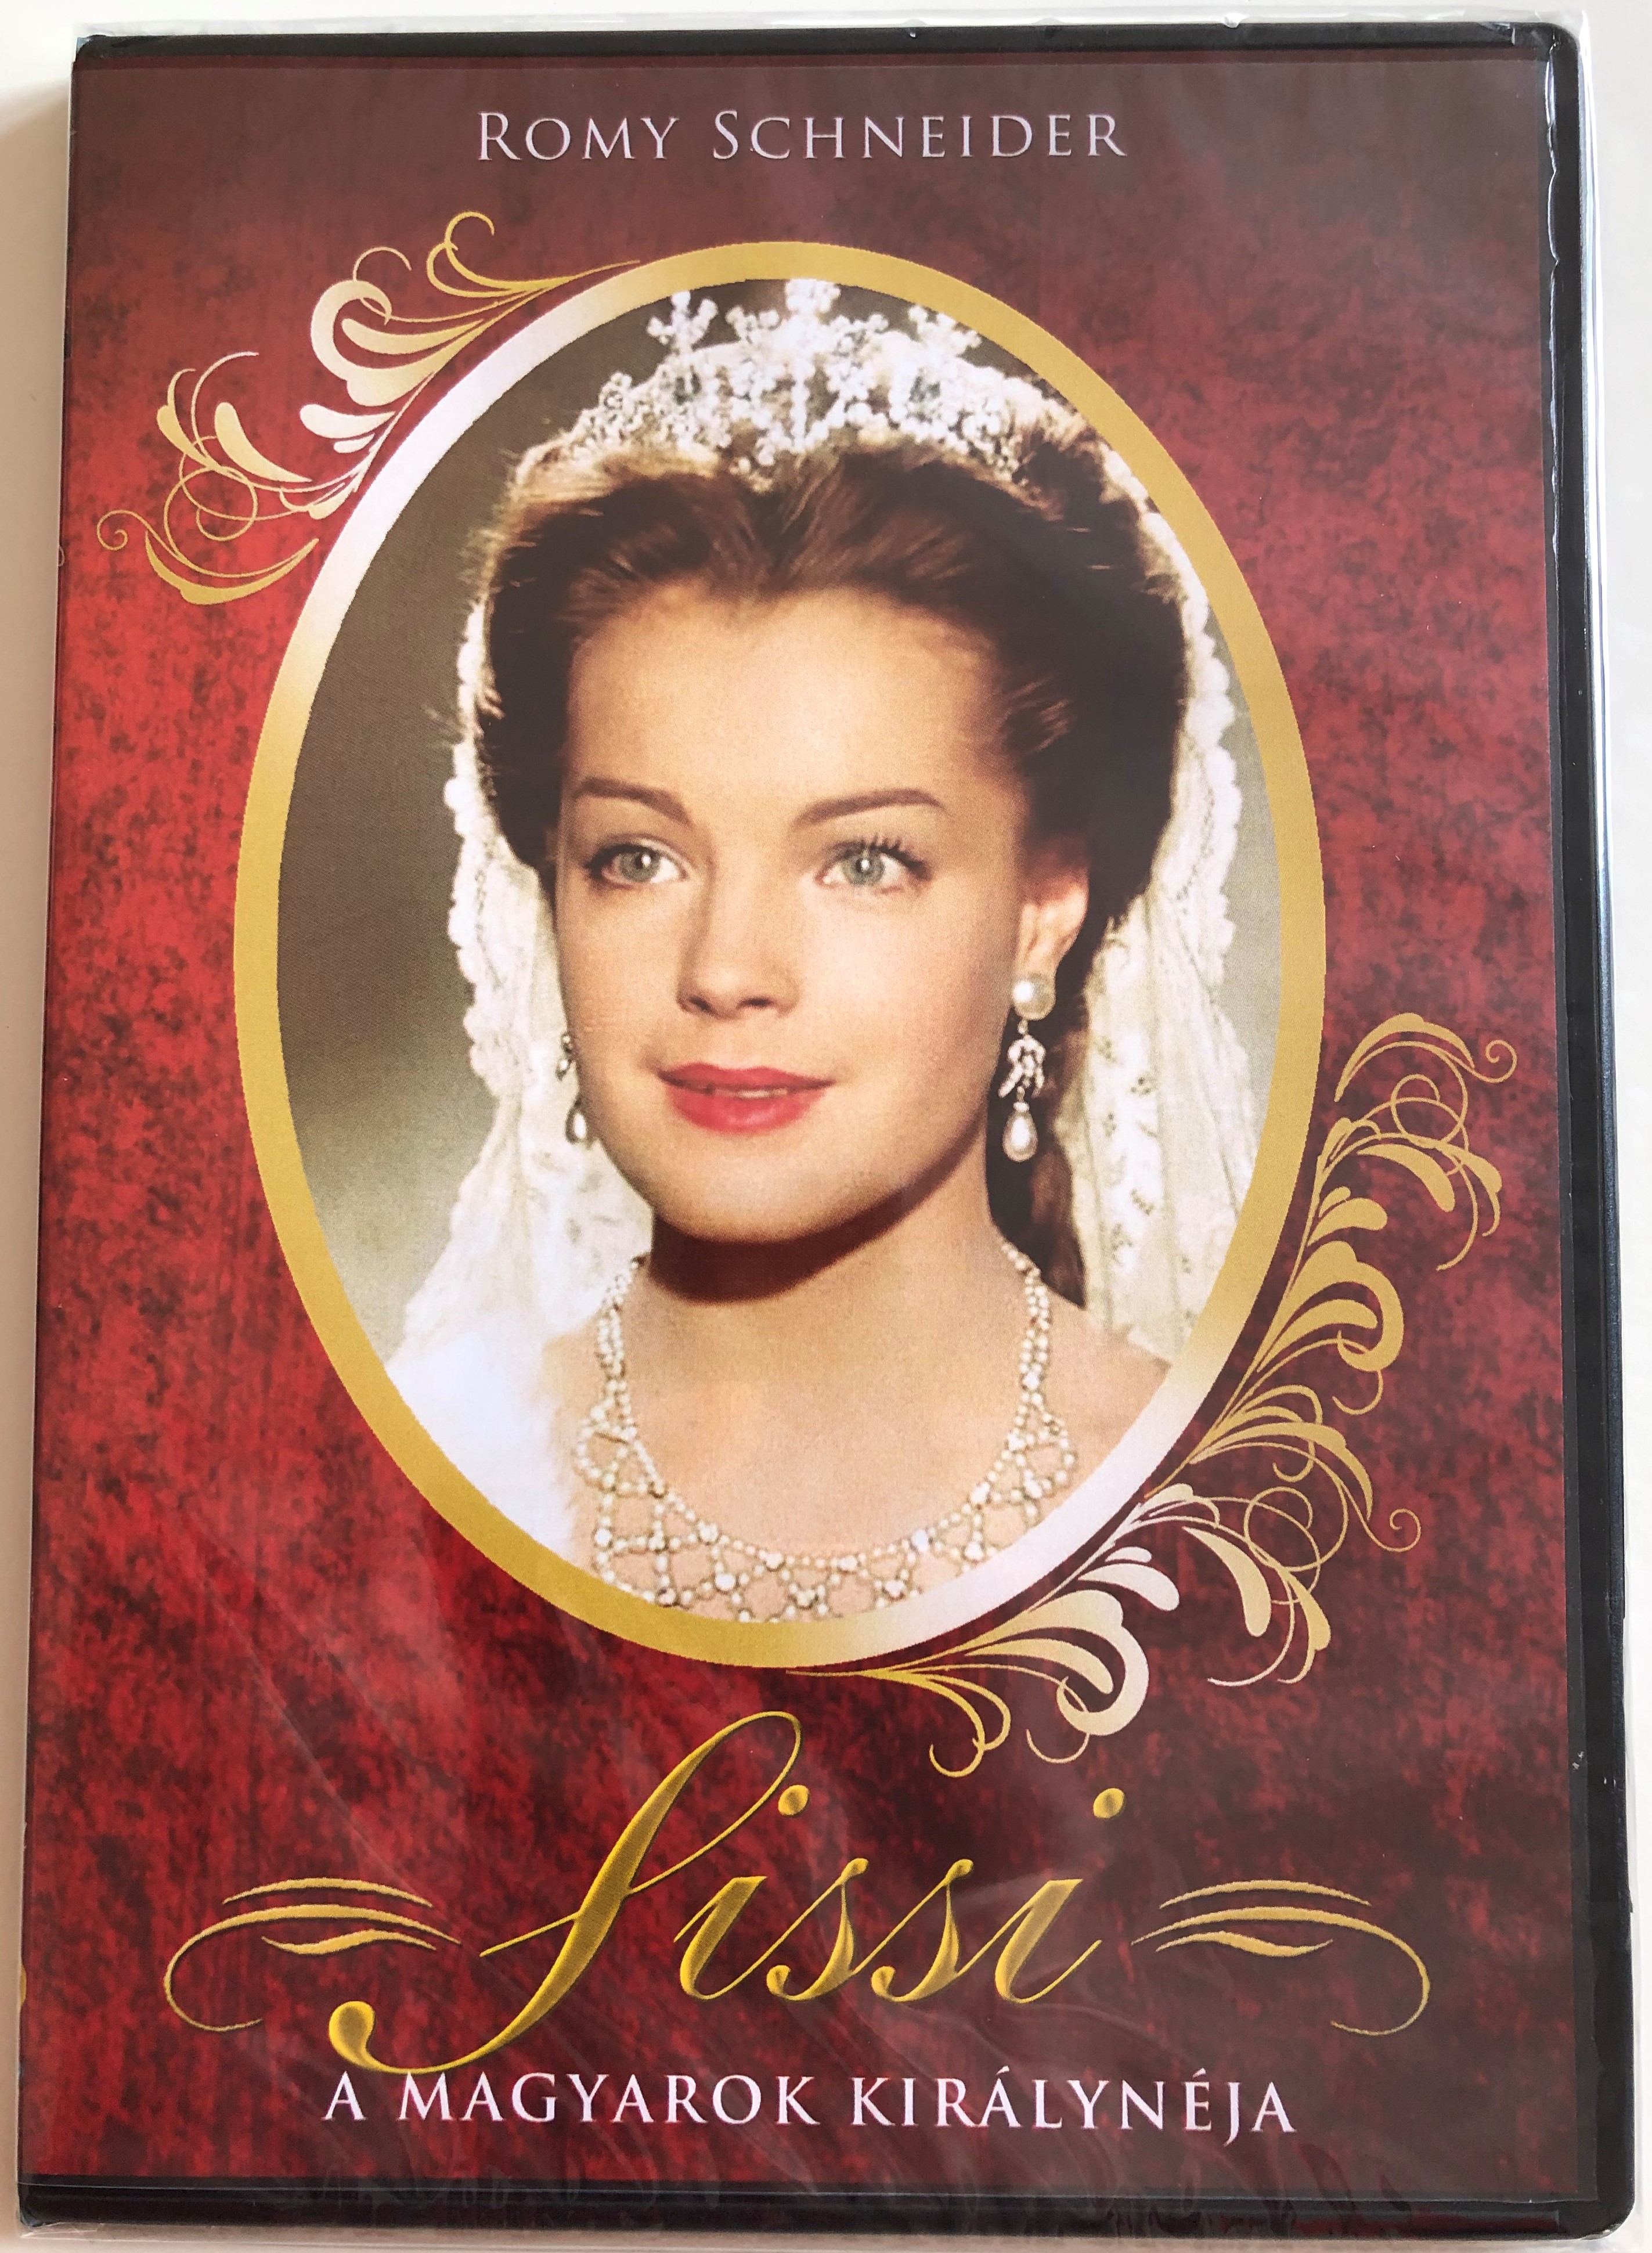 Sissi the queen of hungarians DVD 1955 Sissi a magyarok királynéja 1.JPG